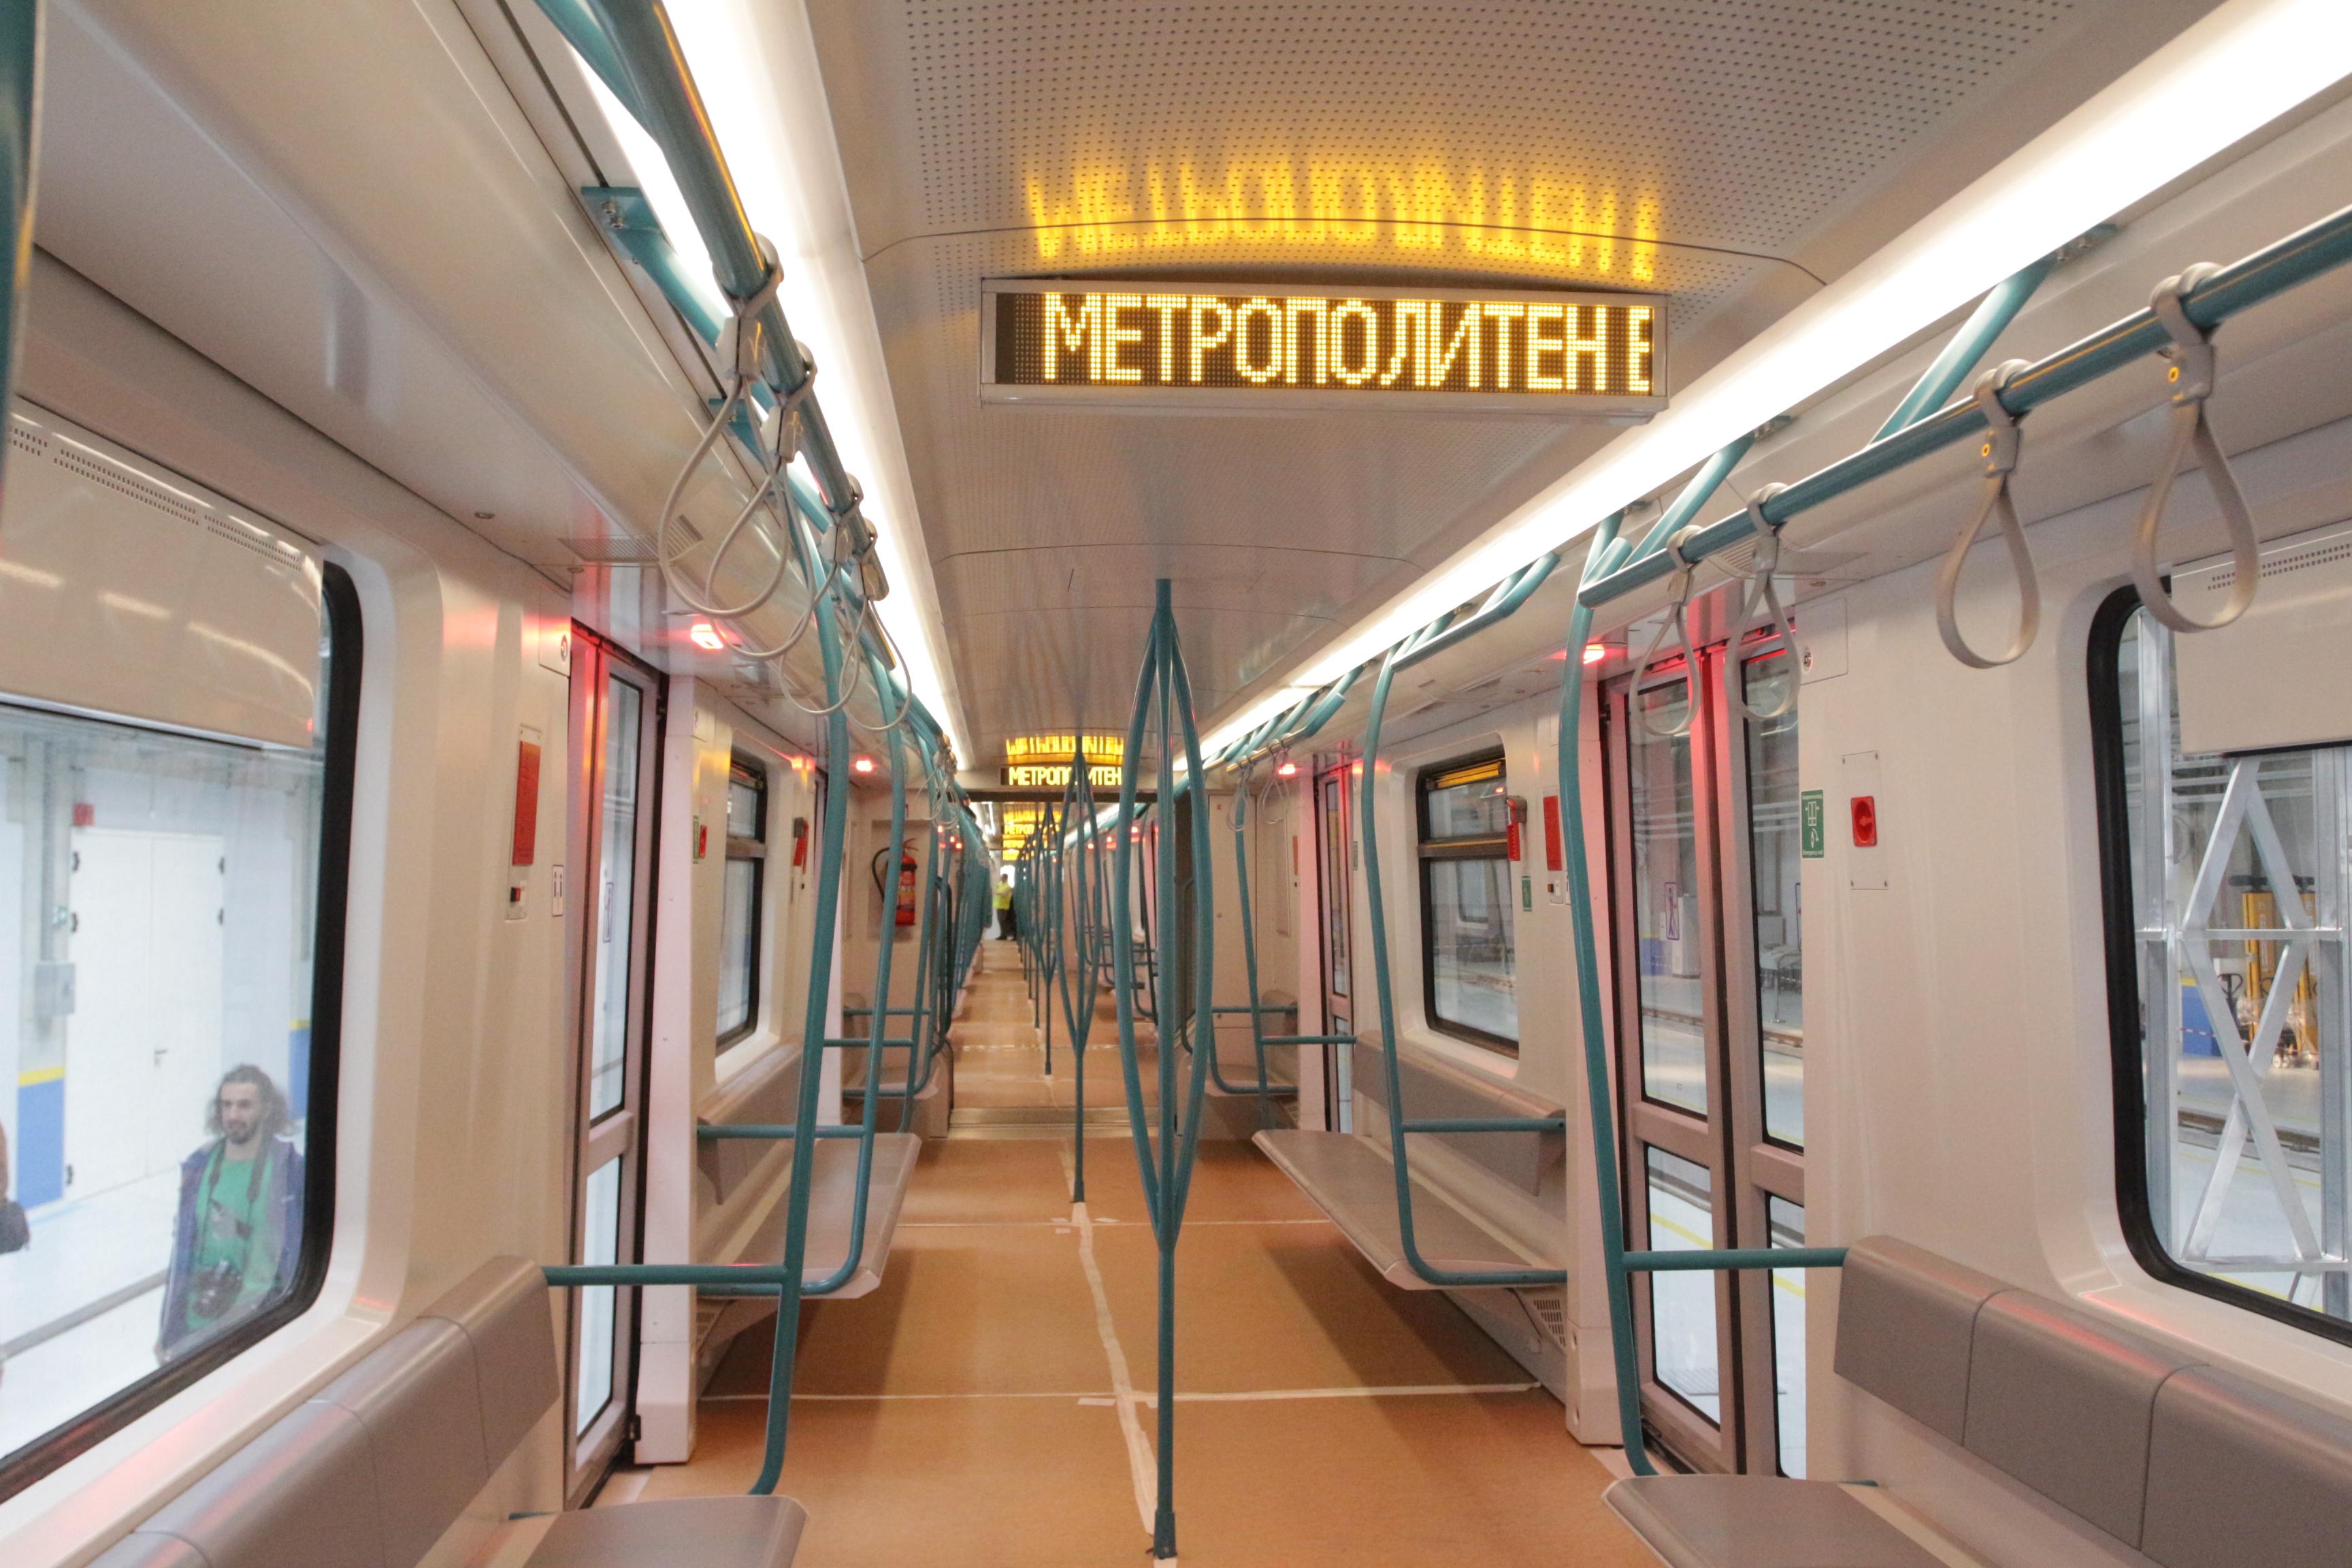 Затвориха метростанция "Централна гара" заради забравен багаж